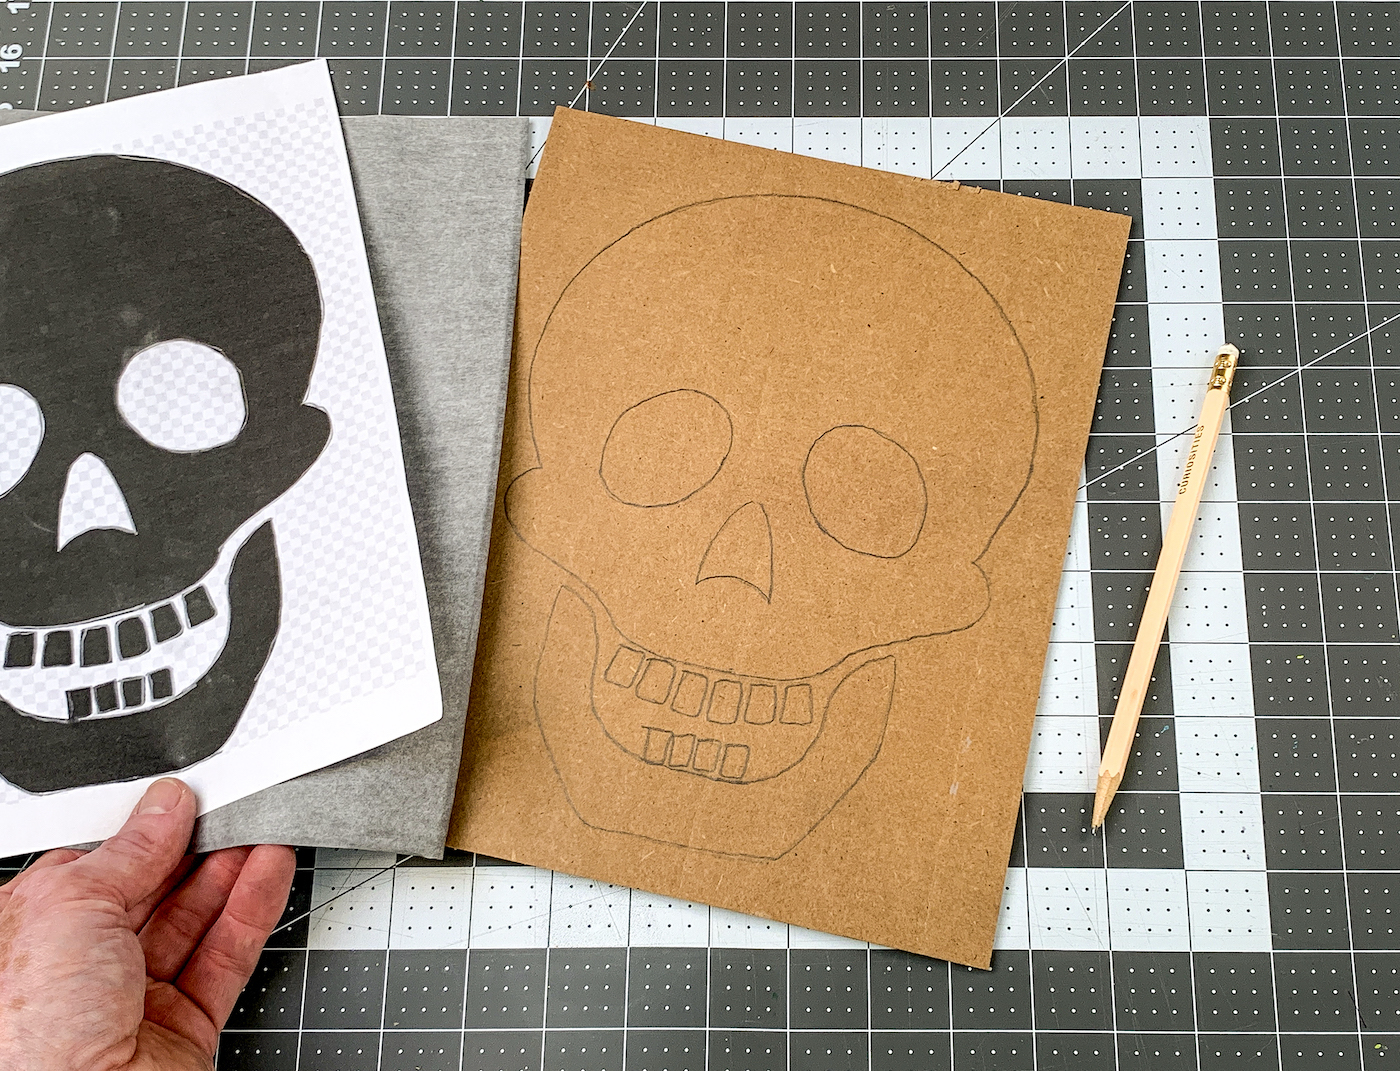 Skull pattern printed on the cardboard